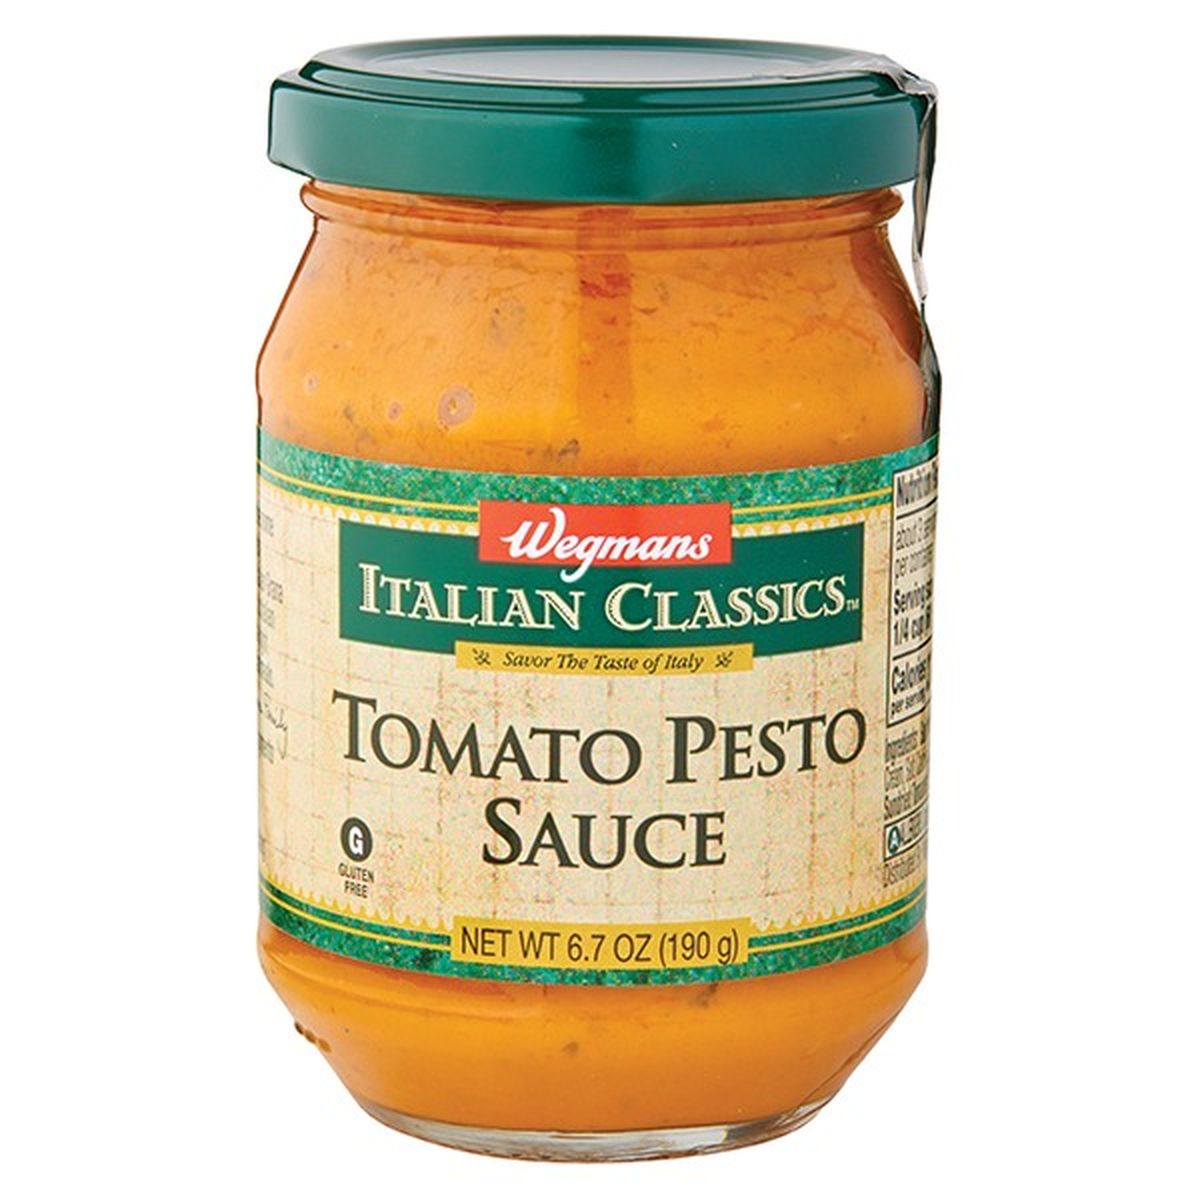 Calories in Wegmans Italian Classics Tomato Pesto Sauce